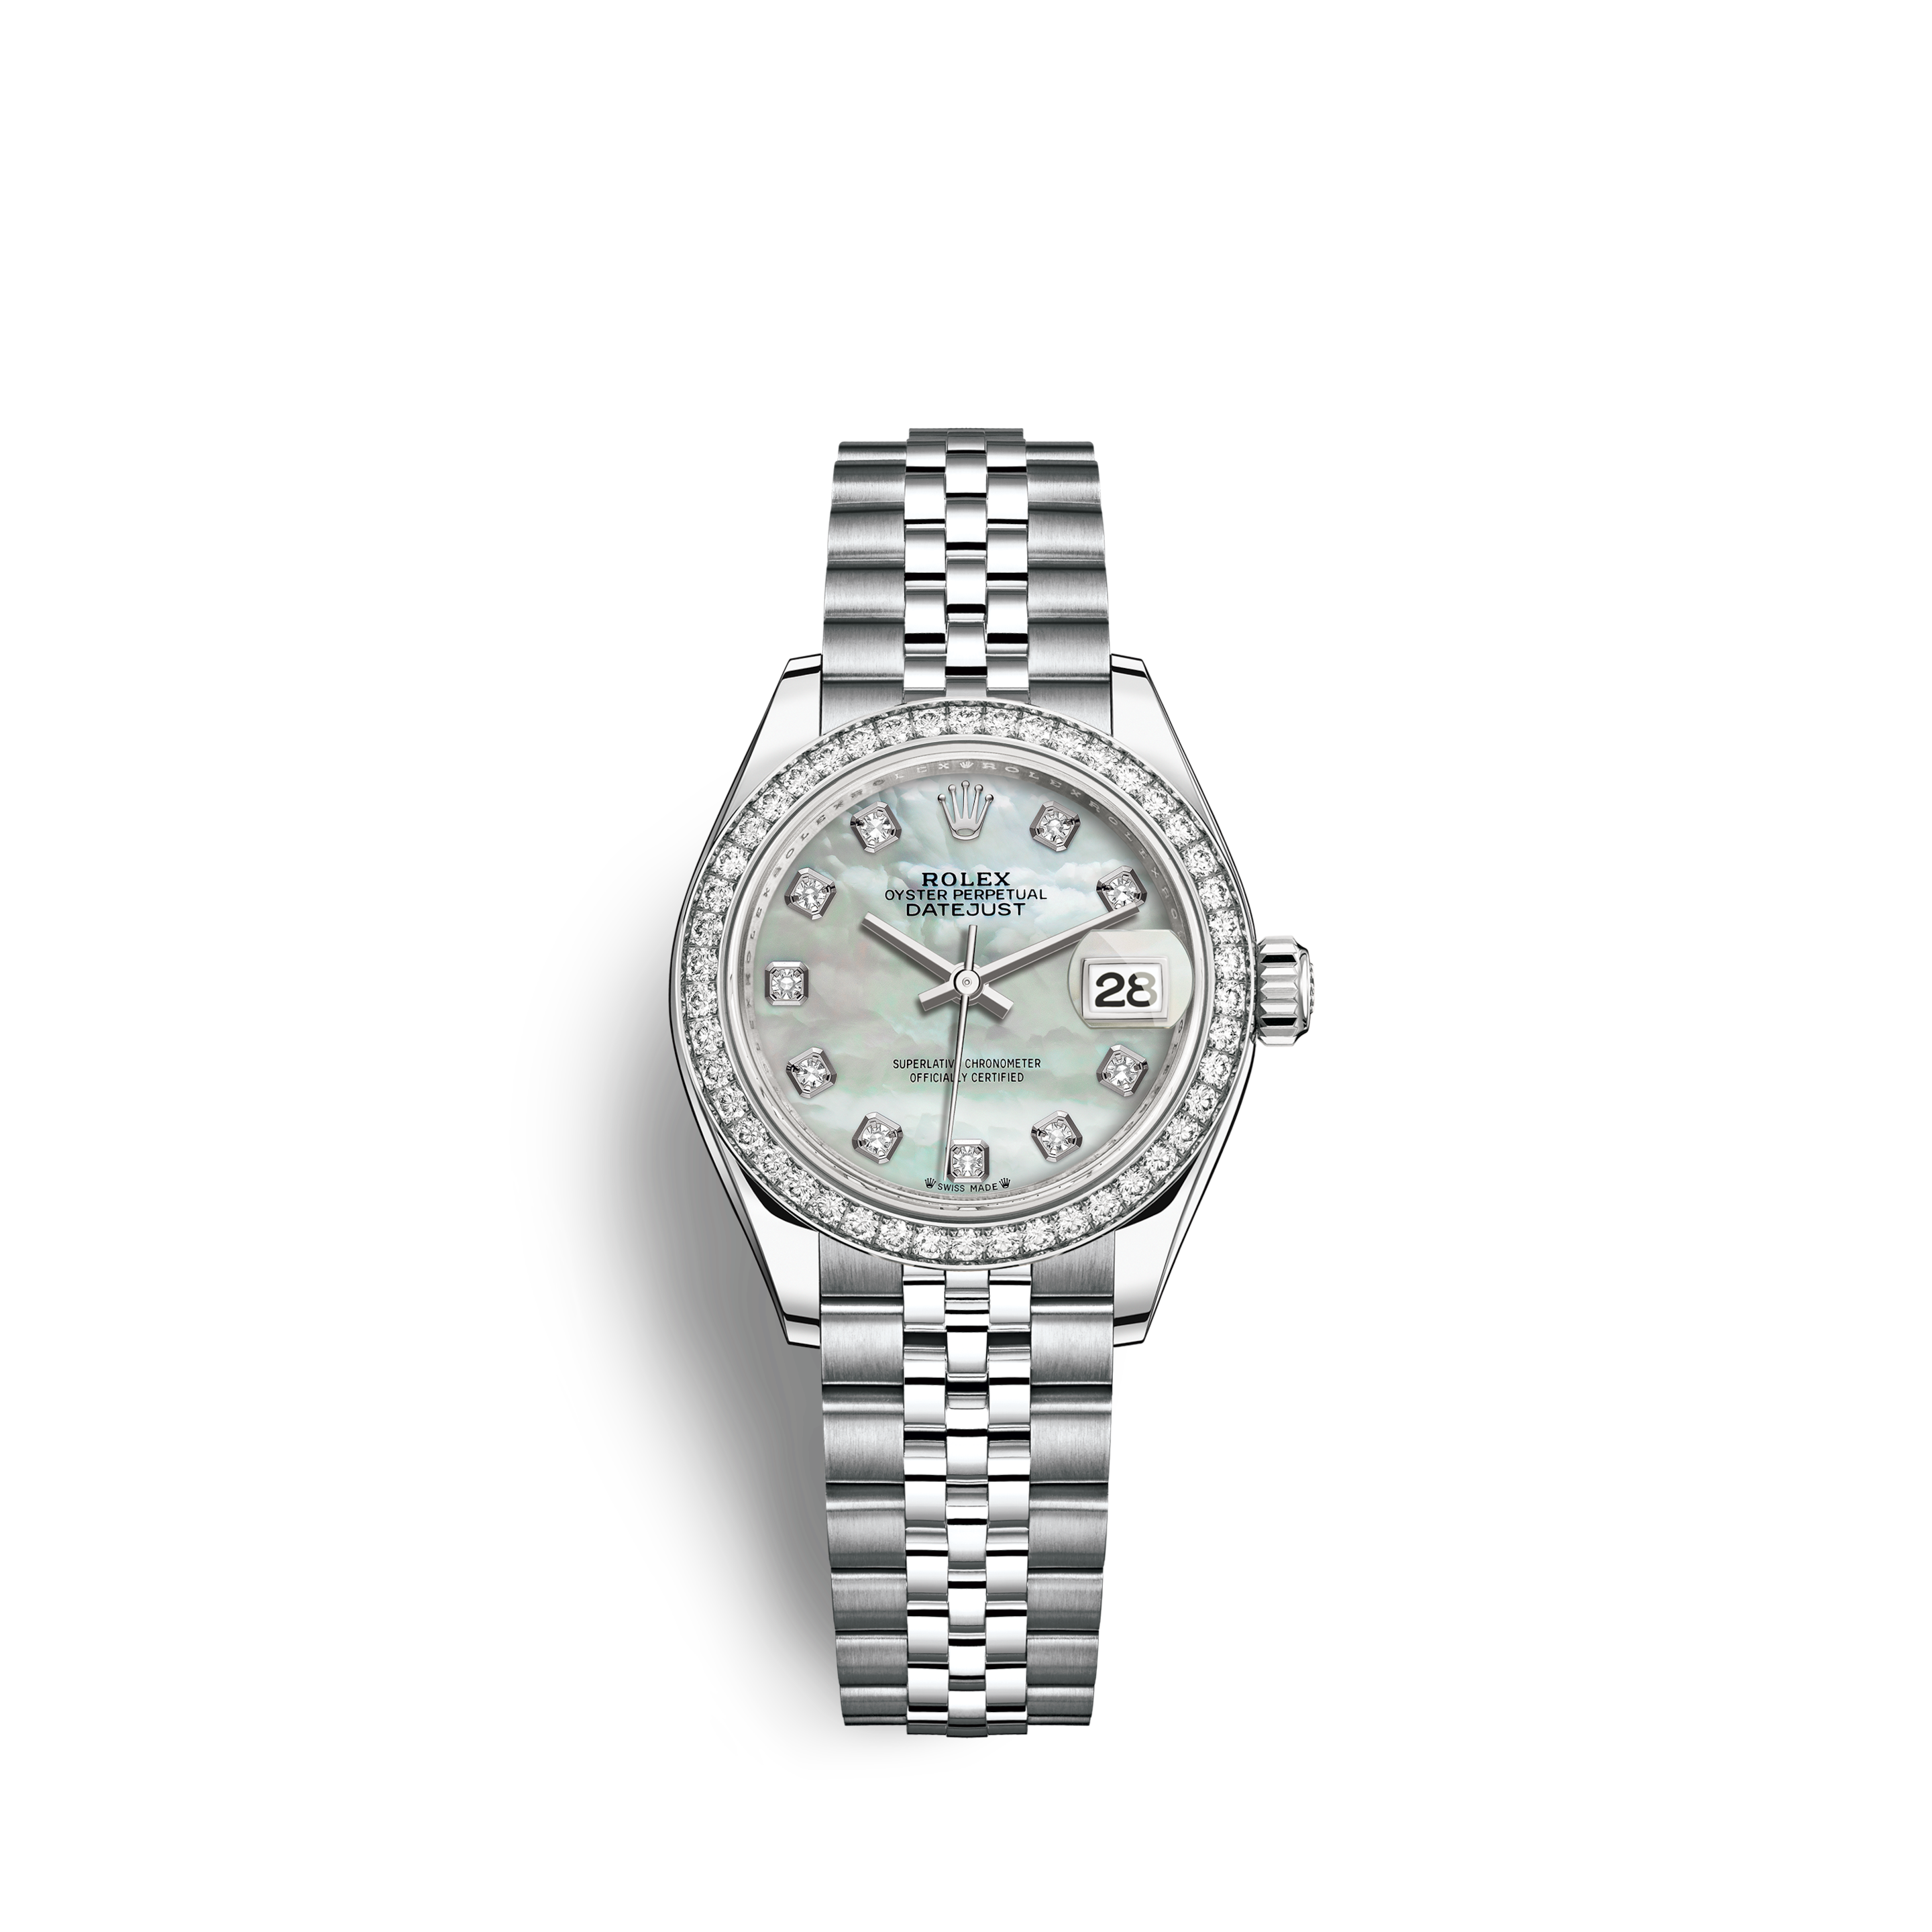 Rolex Daytona Cosmograph Black Chronograph Watch 116500